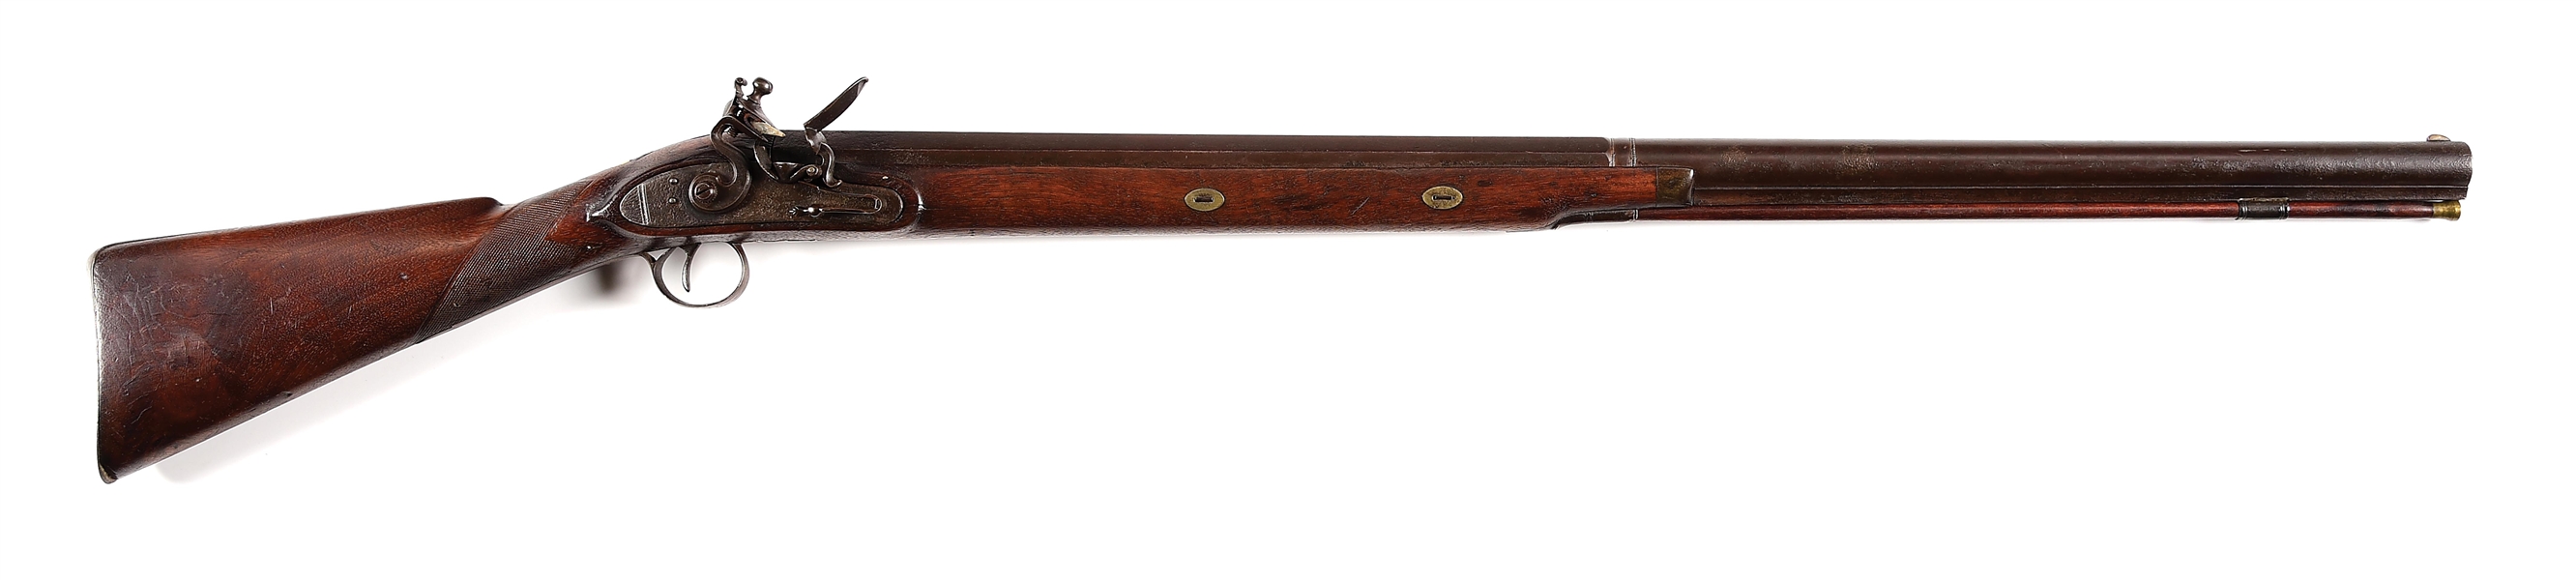 (A) MASSIVE CIRCA 1820 ENGLISH FLINTLOCK PUNT GUN WITH BARREL MARKED BALTIMORE.